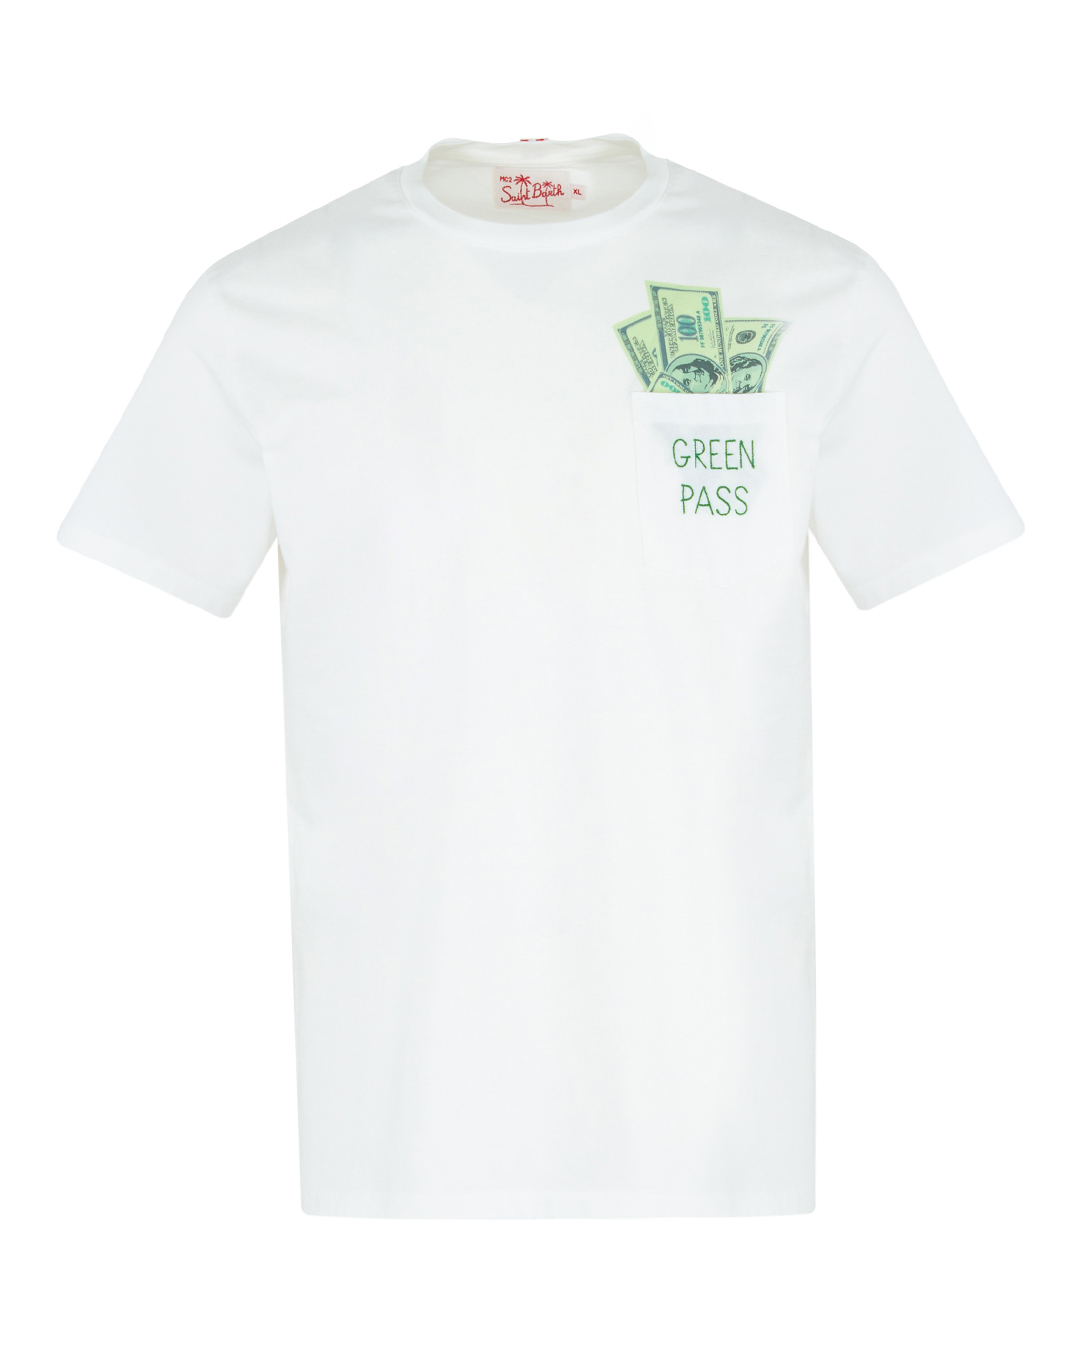 футболка MC2 Saint Barth AUSTIN GREEN PASS белый+принт xl, размер xl, цвет белый+принт AUSTIN GREEN PASS белый+принт xl - фото 1